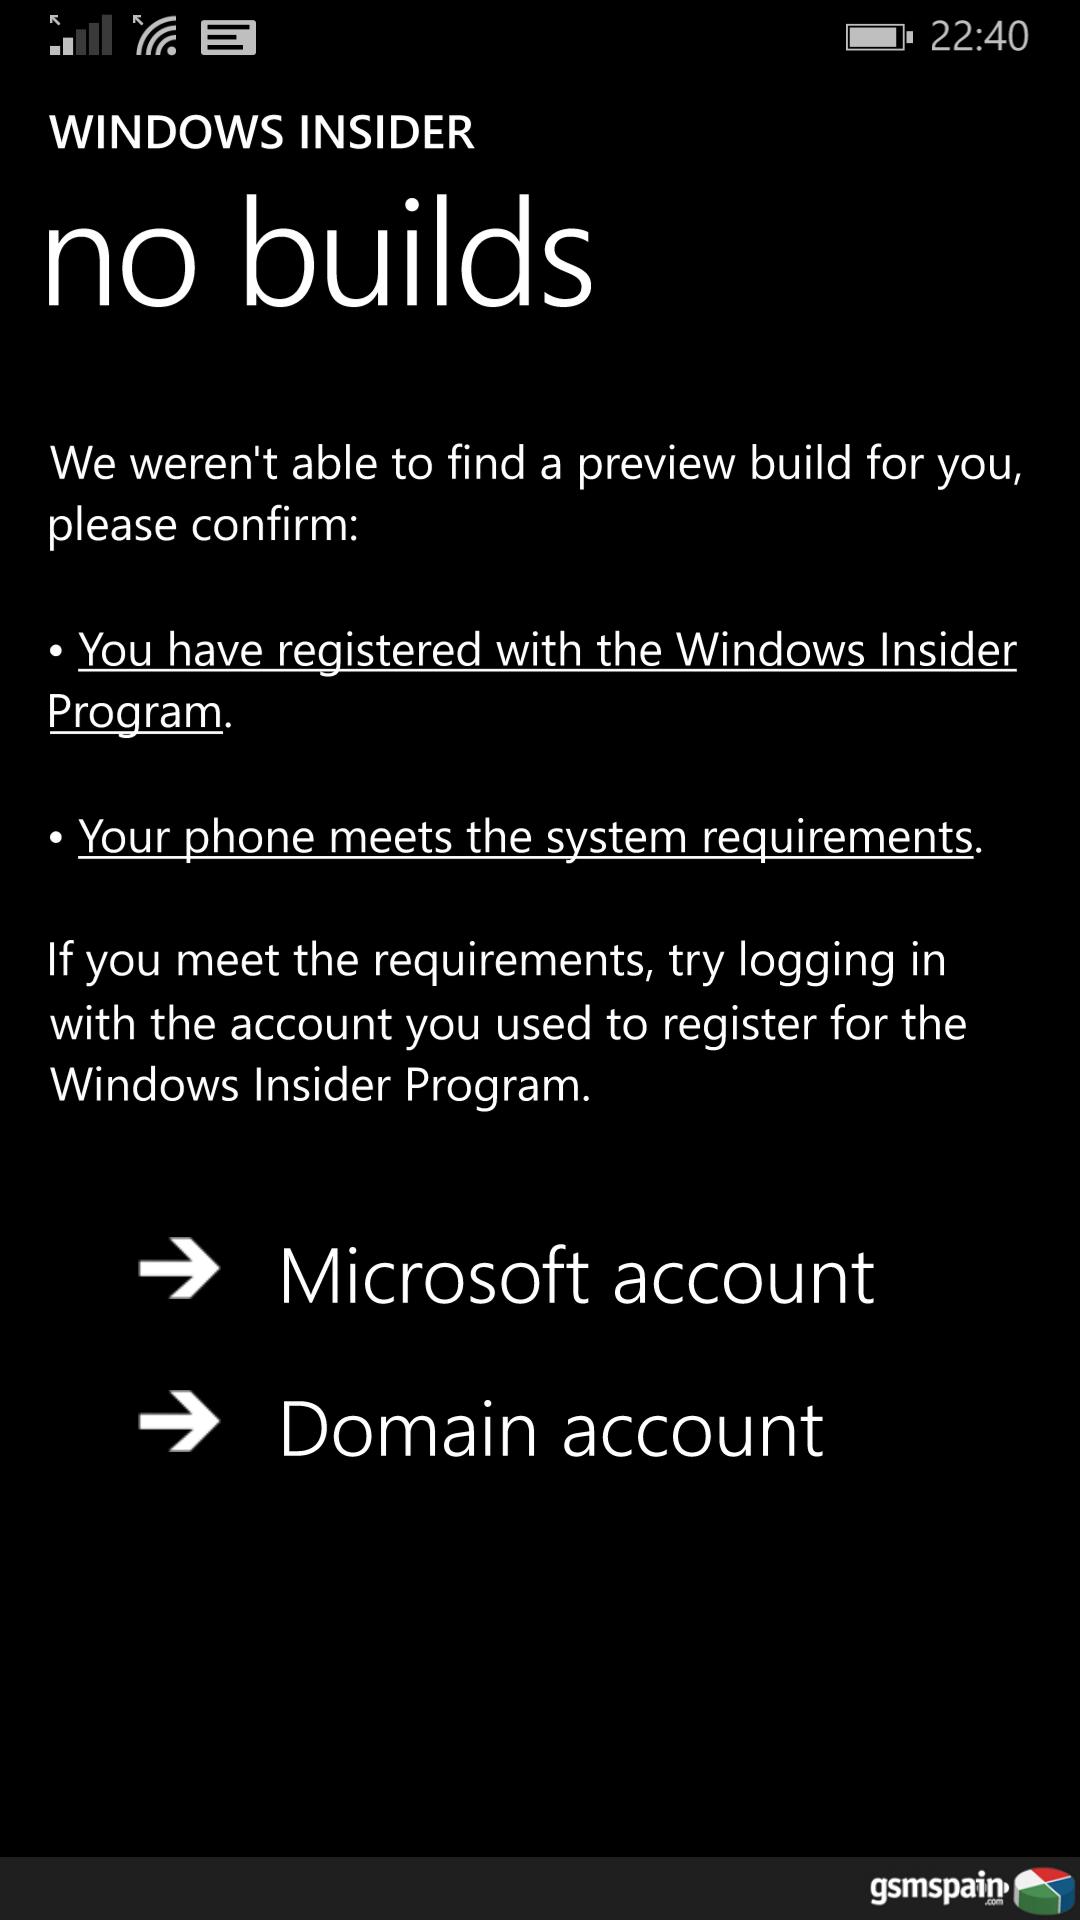 [TUTORIAL] Instalar Windows 10 Technical Preview para mviles